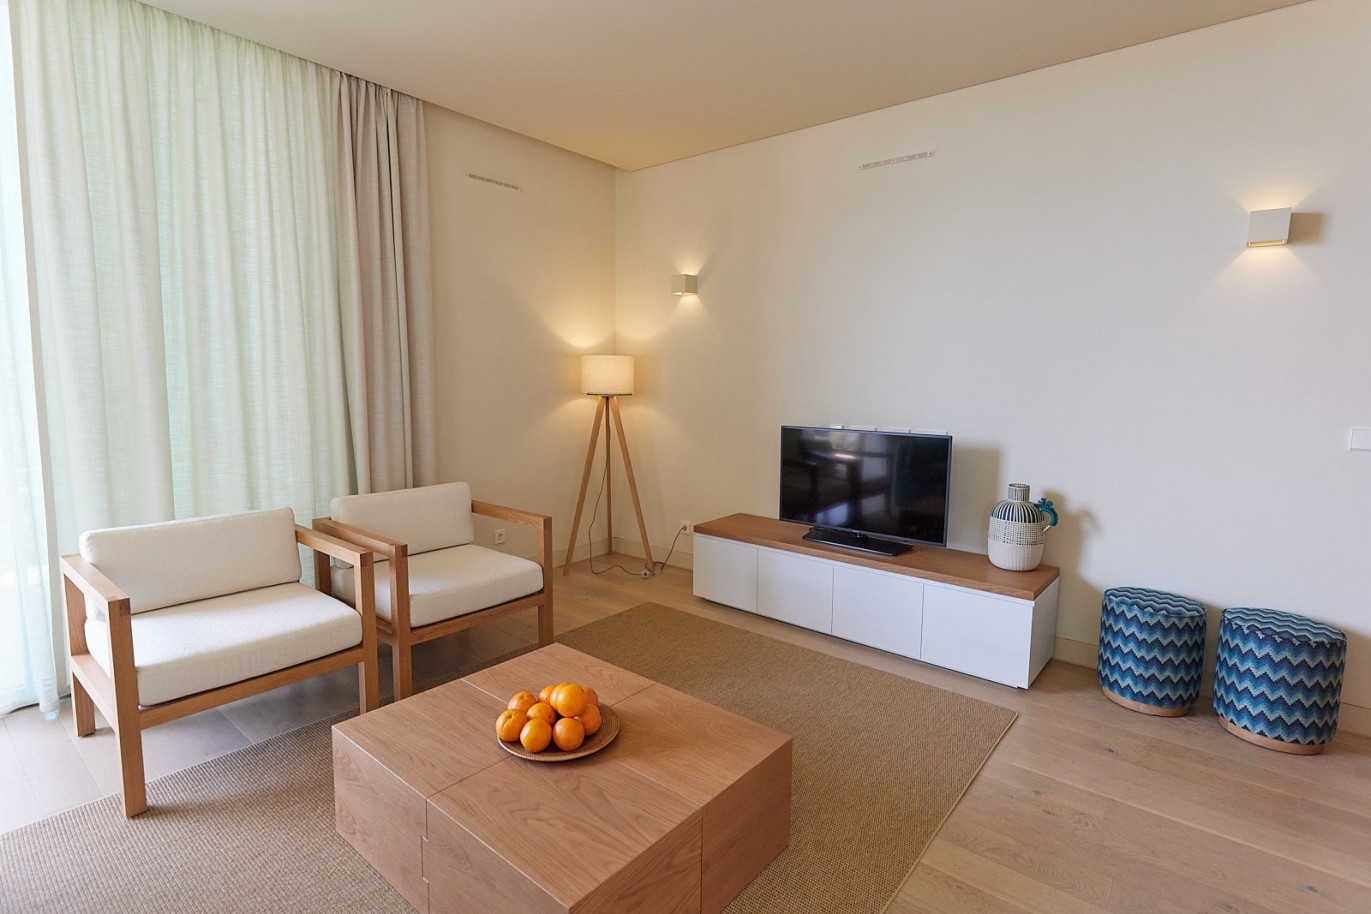 2 bedroom apartment in resort, for sale in Porches, Algarve_228951